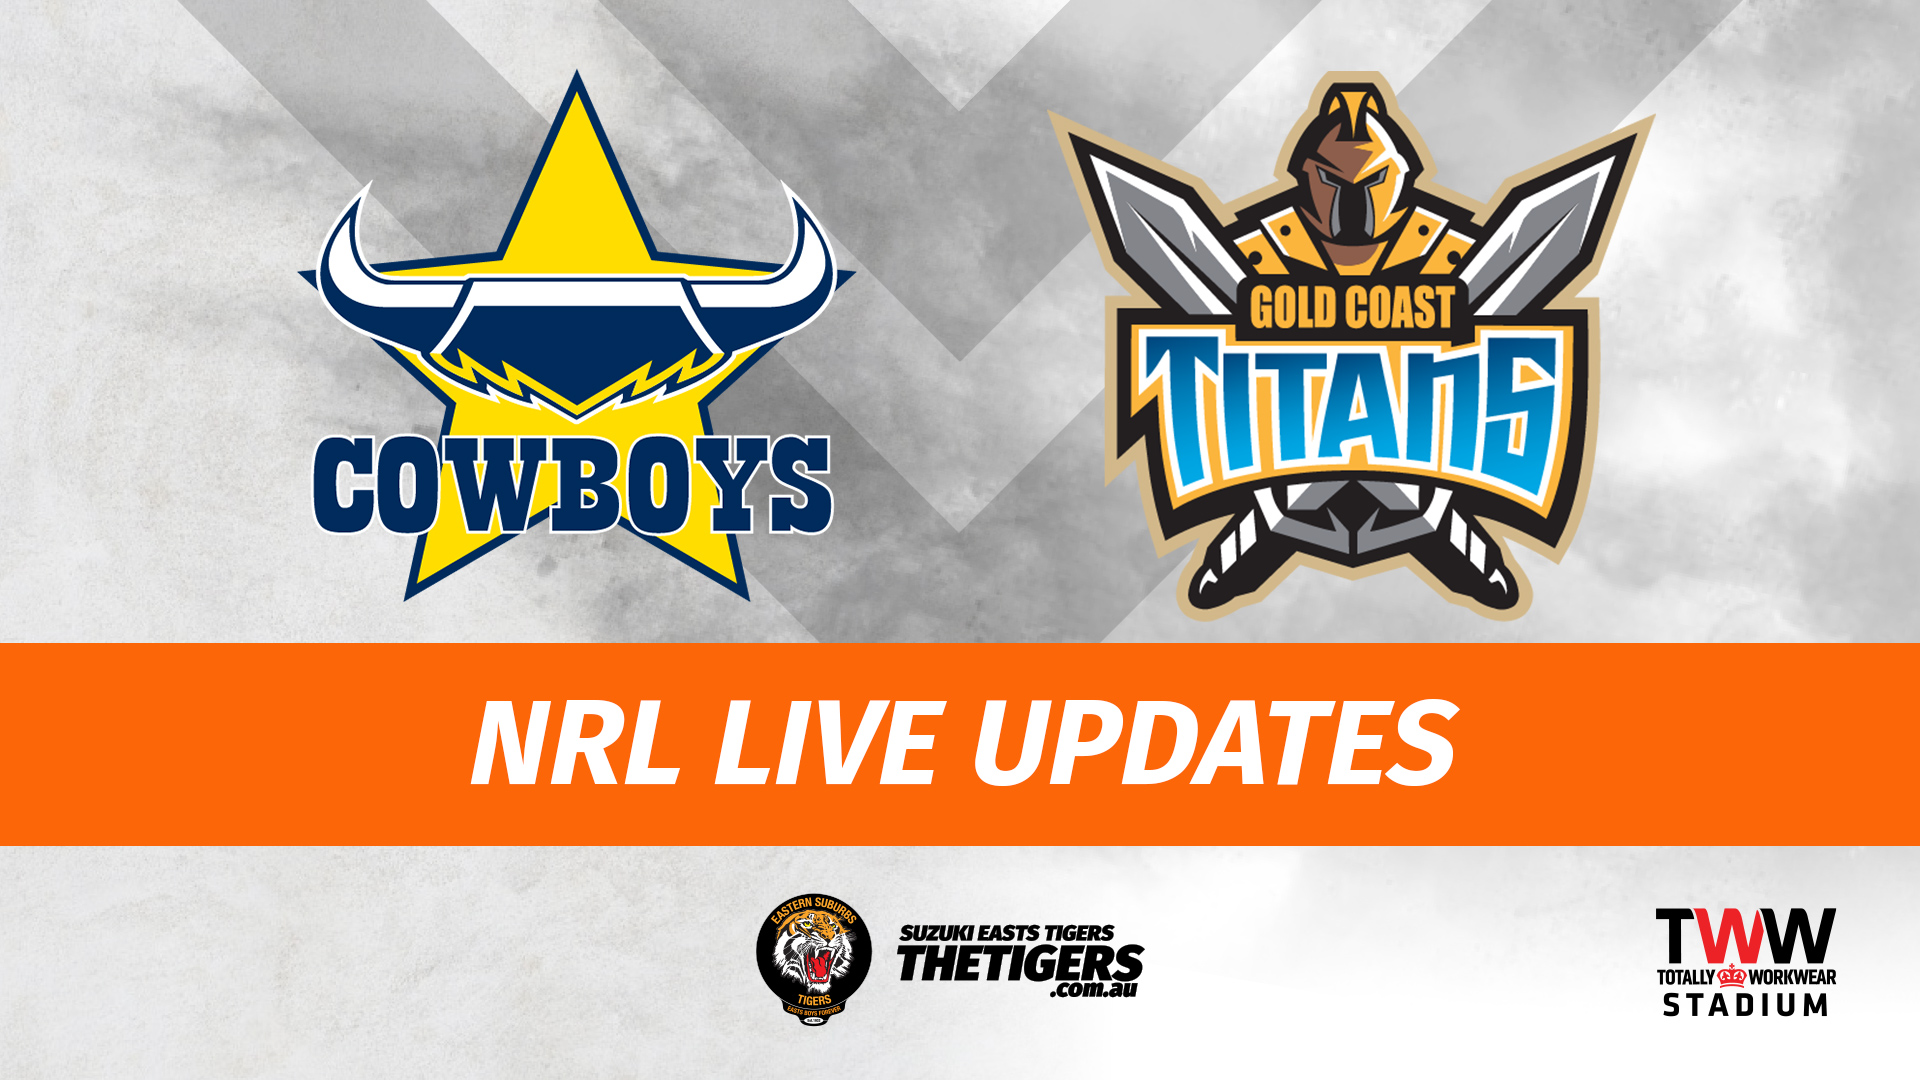 Cowboys Titans NRL Live Updates on TheTigers